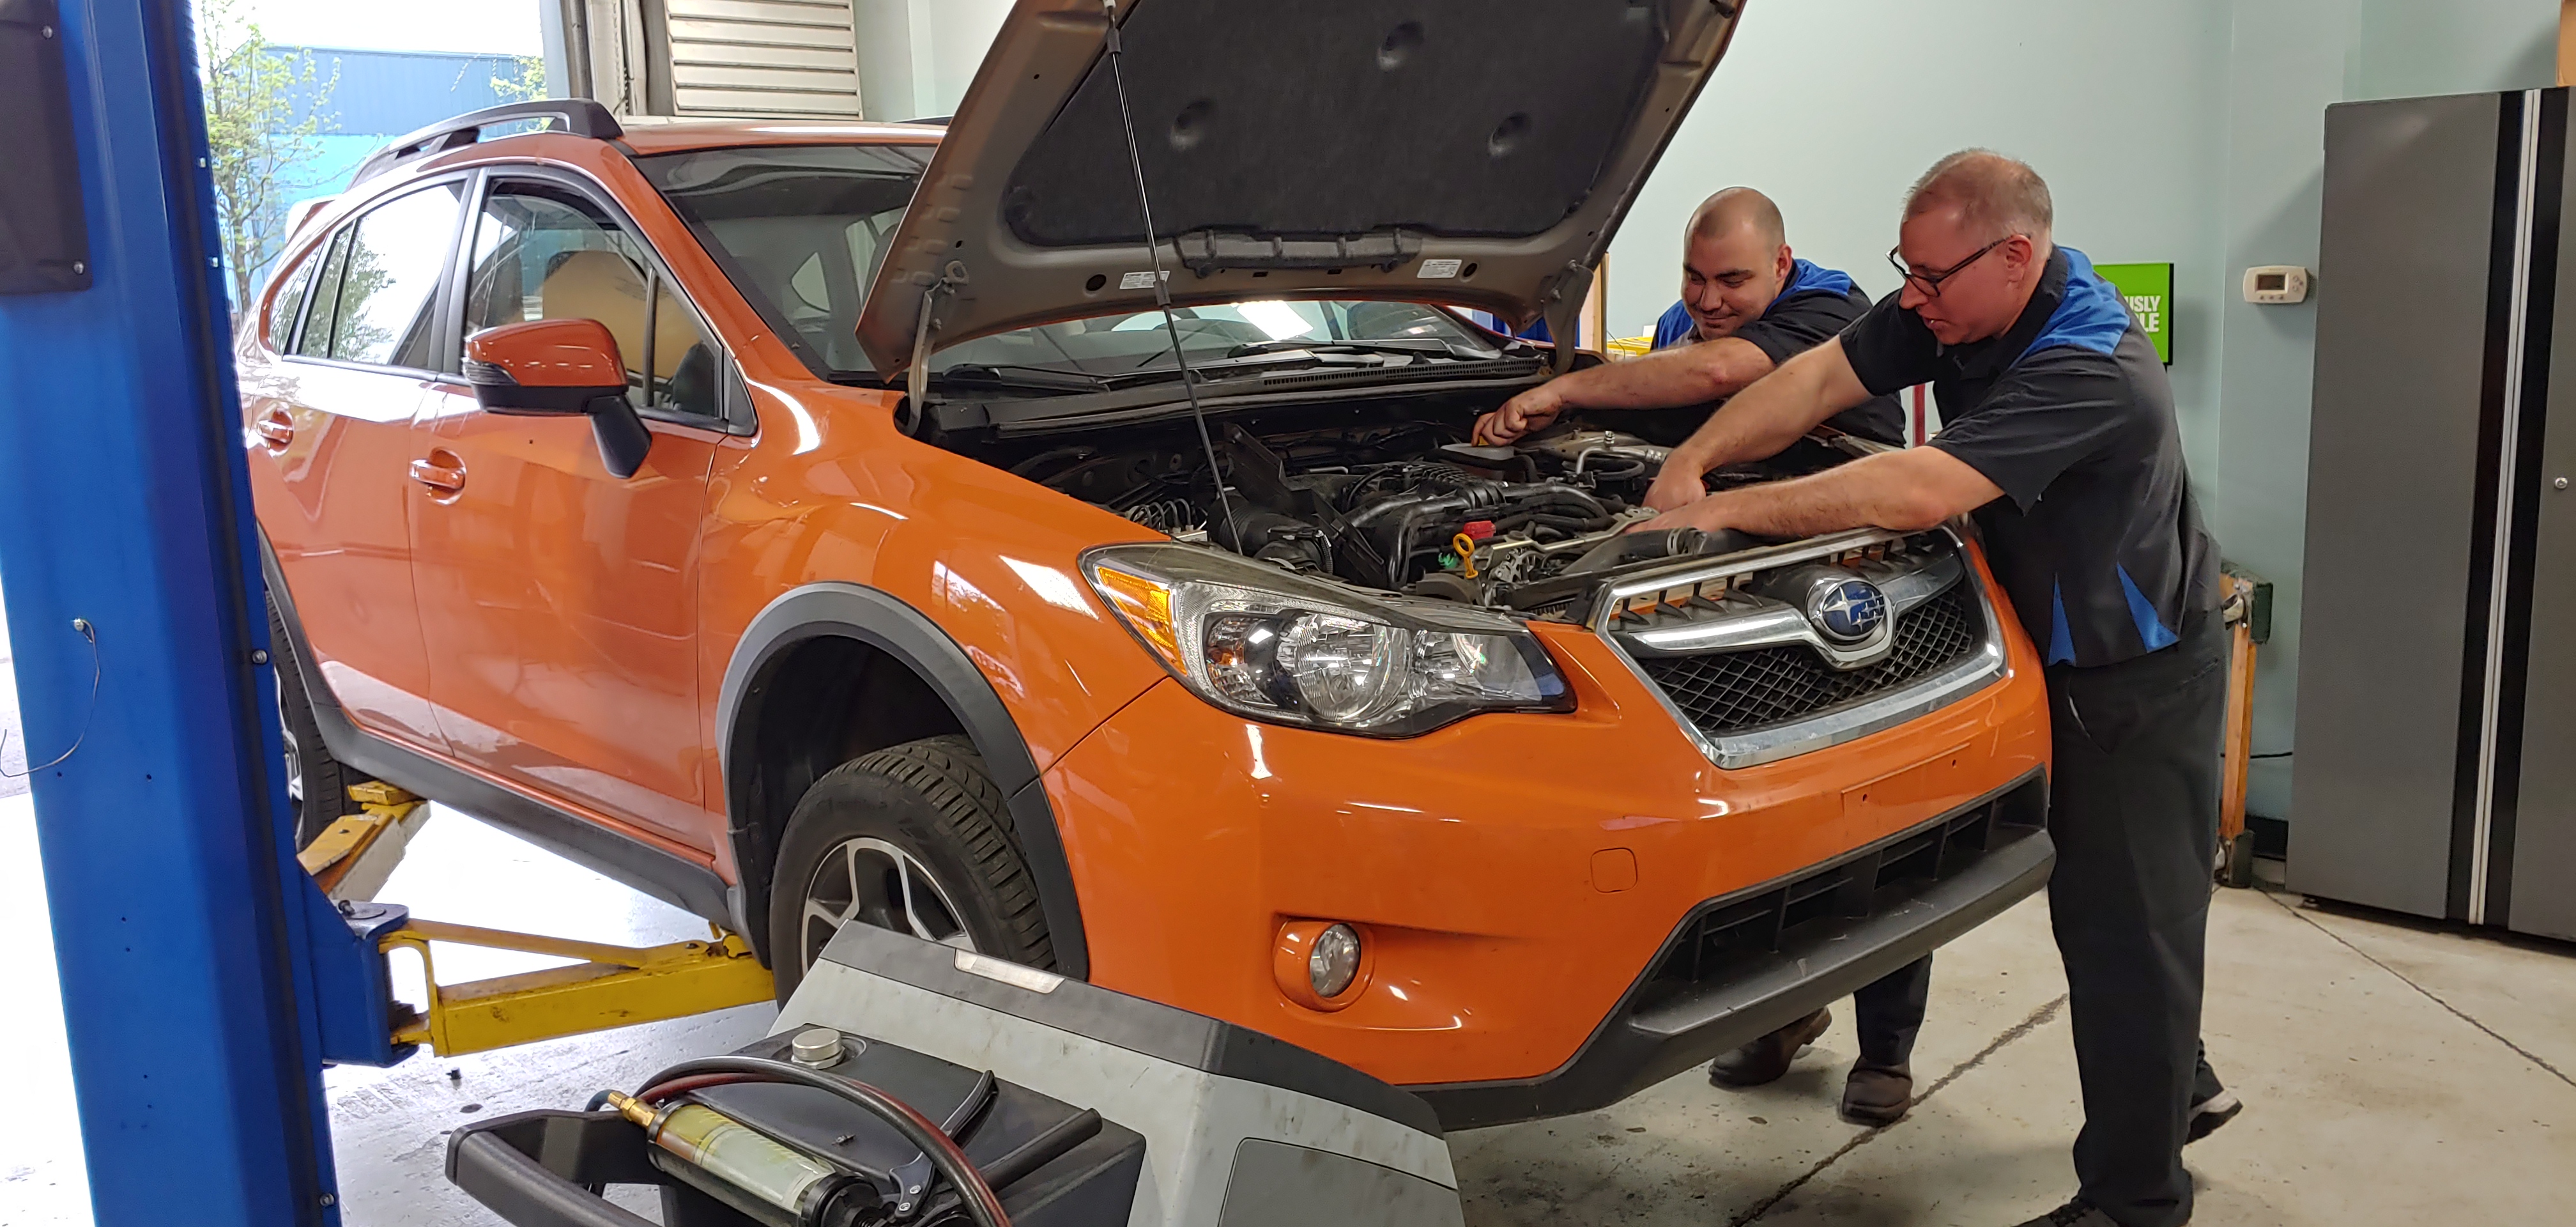 Subaru Car Inspection In Our Garage